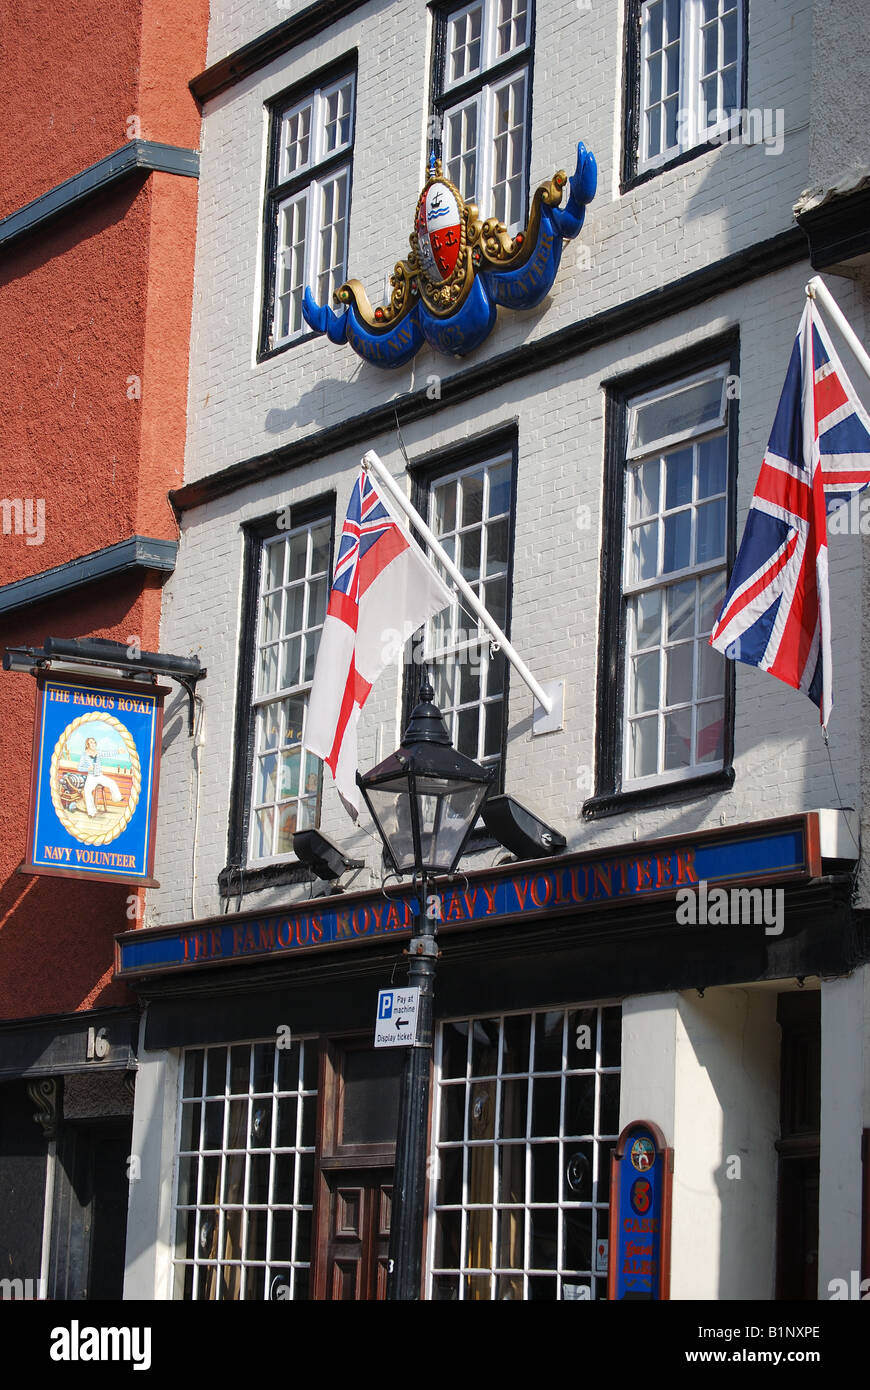 Royal Navy Volunteer Pub, rue King, Vieille Ville, Bristol, Angleterre, Royaume-Uni Banque D'Images